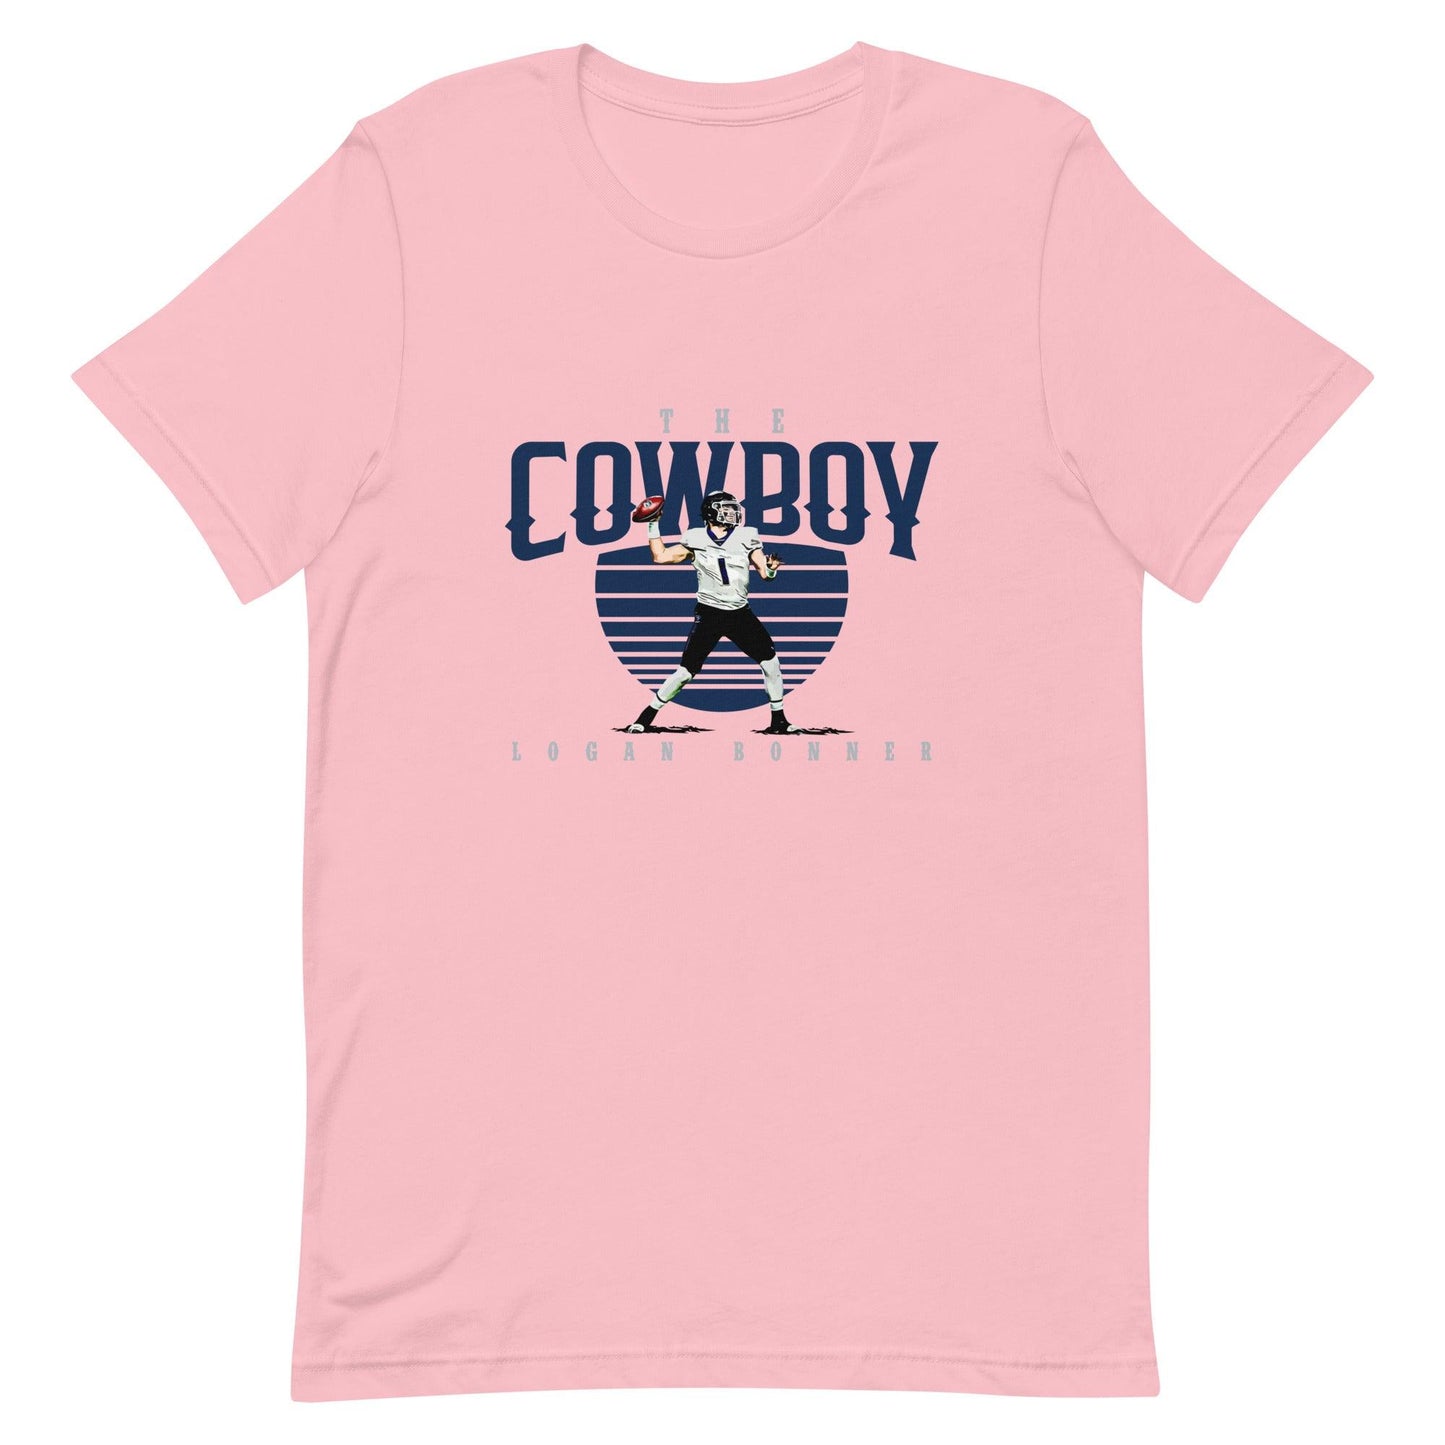 Logan Bonner "The Cowboy" t-shirt - Fan Arch